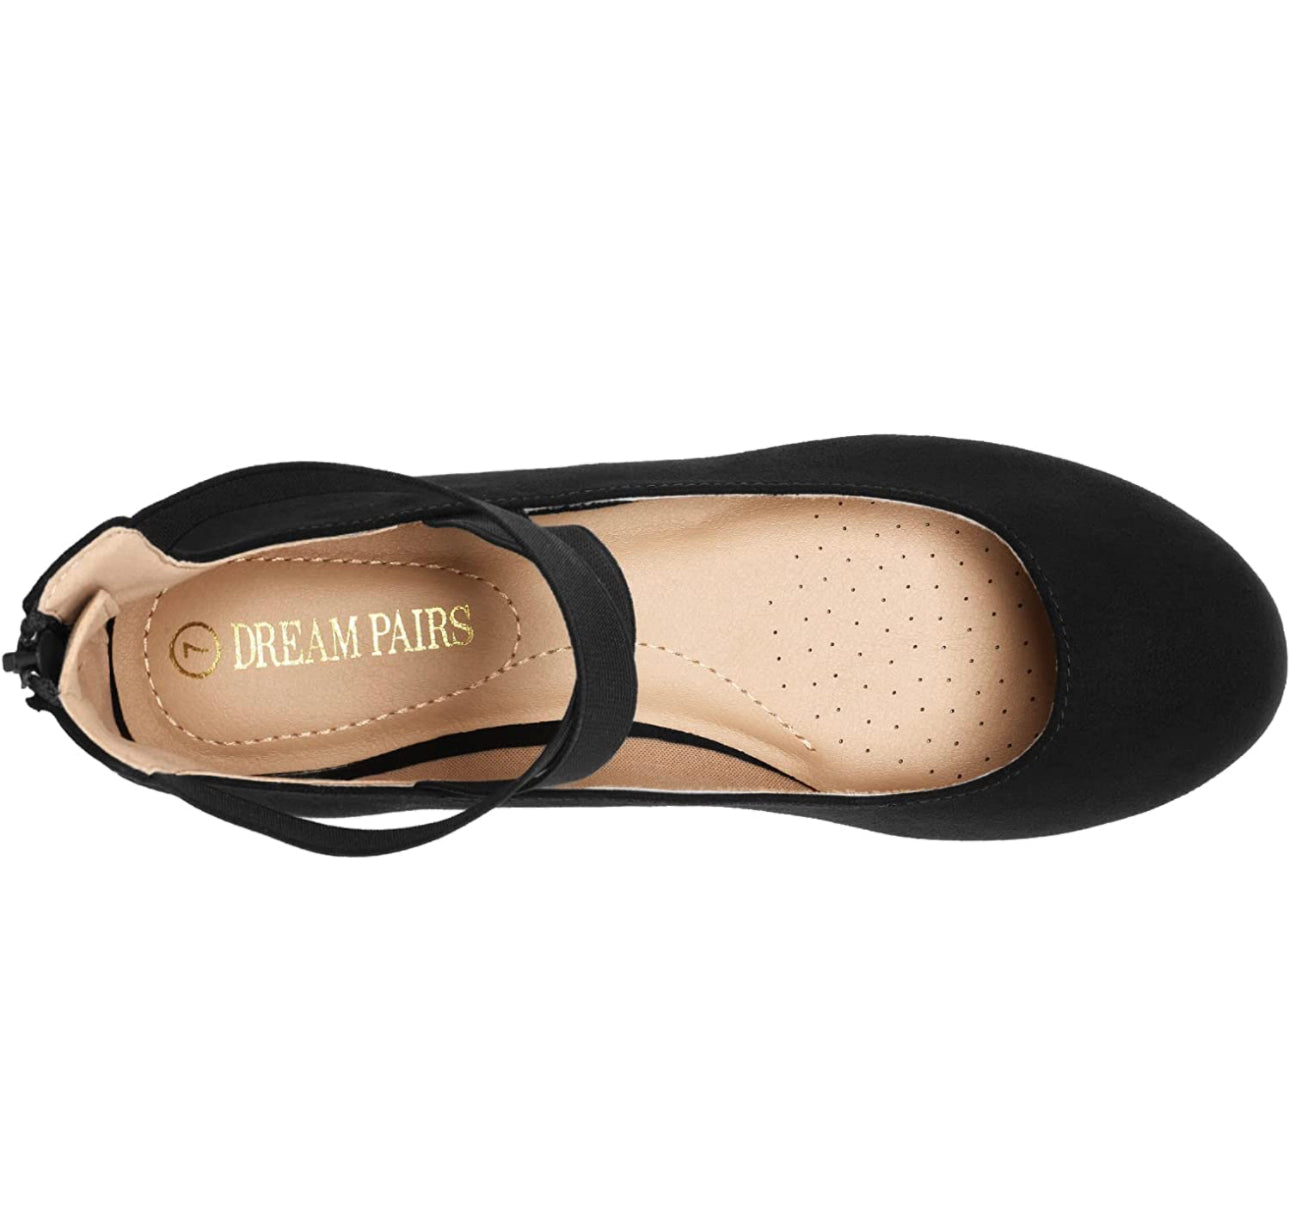 DREAM PAIRS Women's Comfortable Fashion Elastic Ankle Straps Flats Shoes size 7